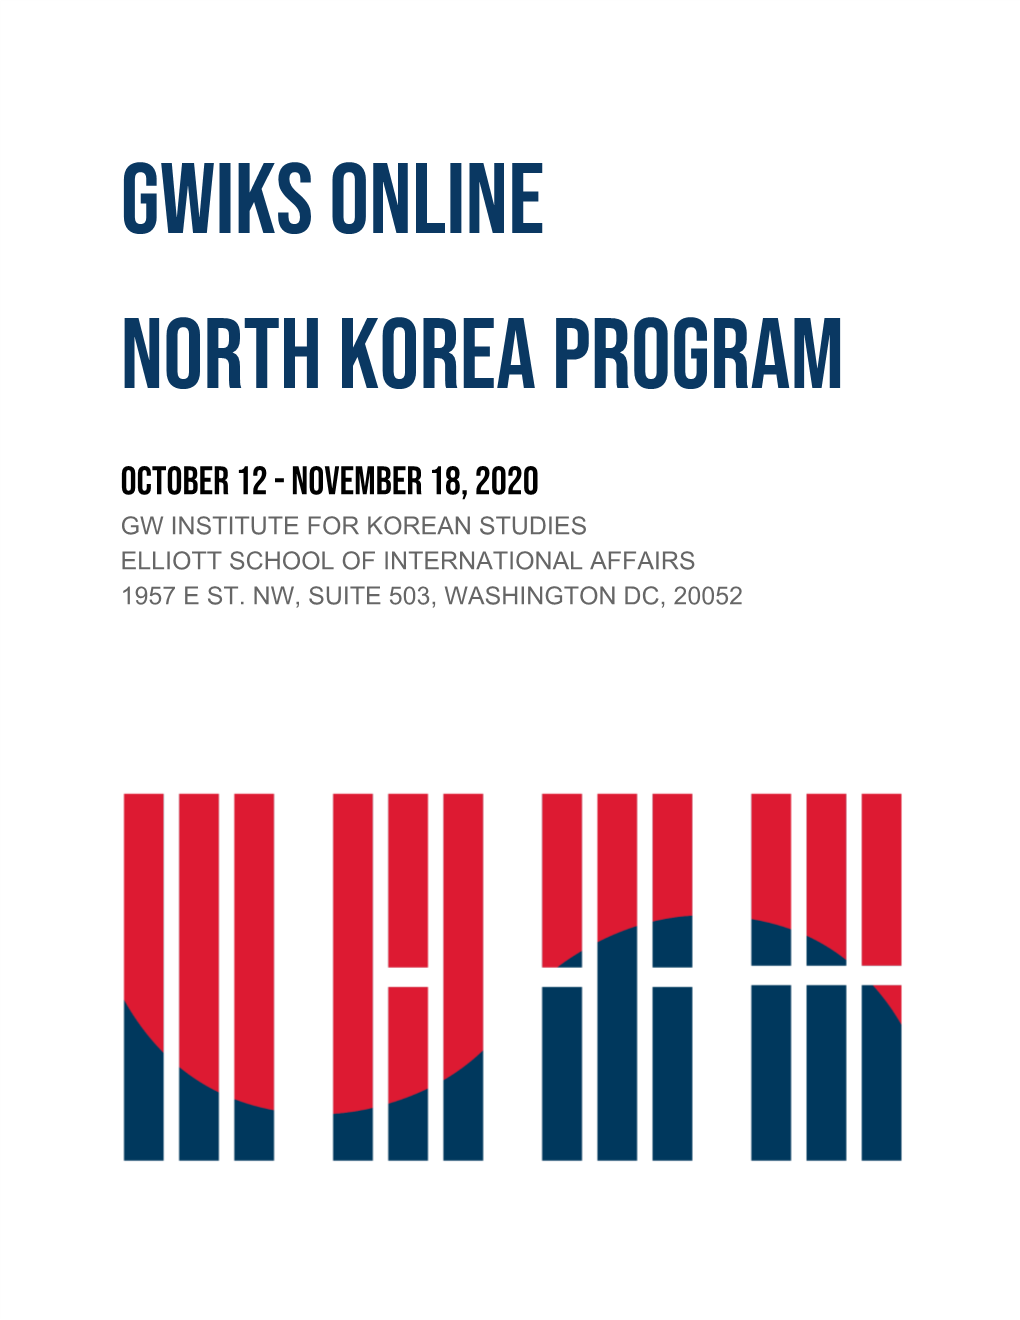 GWIKS Online North Korea Program